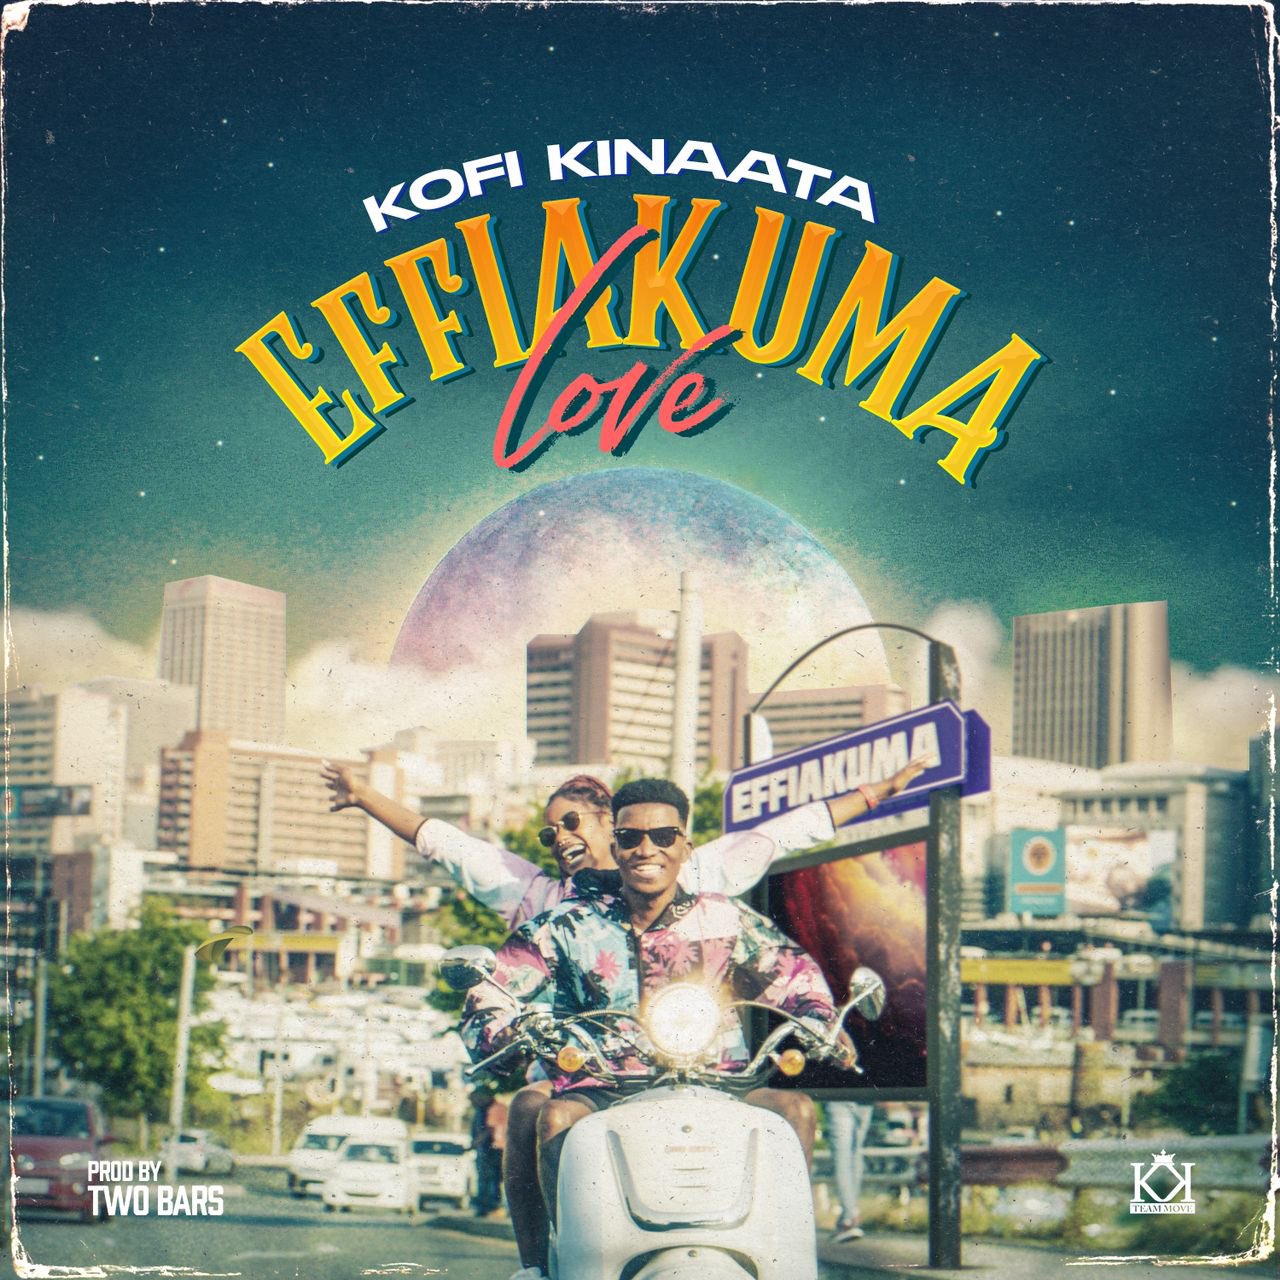 Kofi Kinaata - Effiakuma Love 10